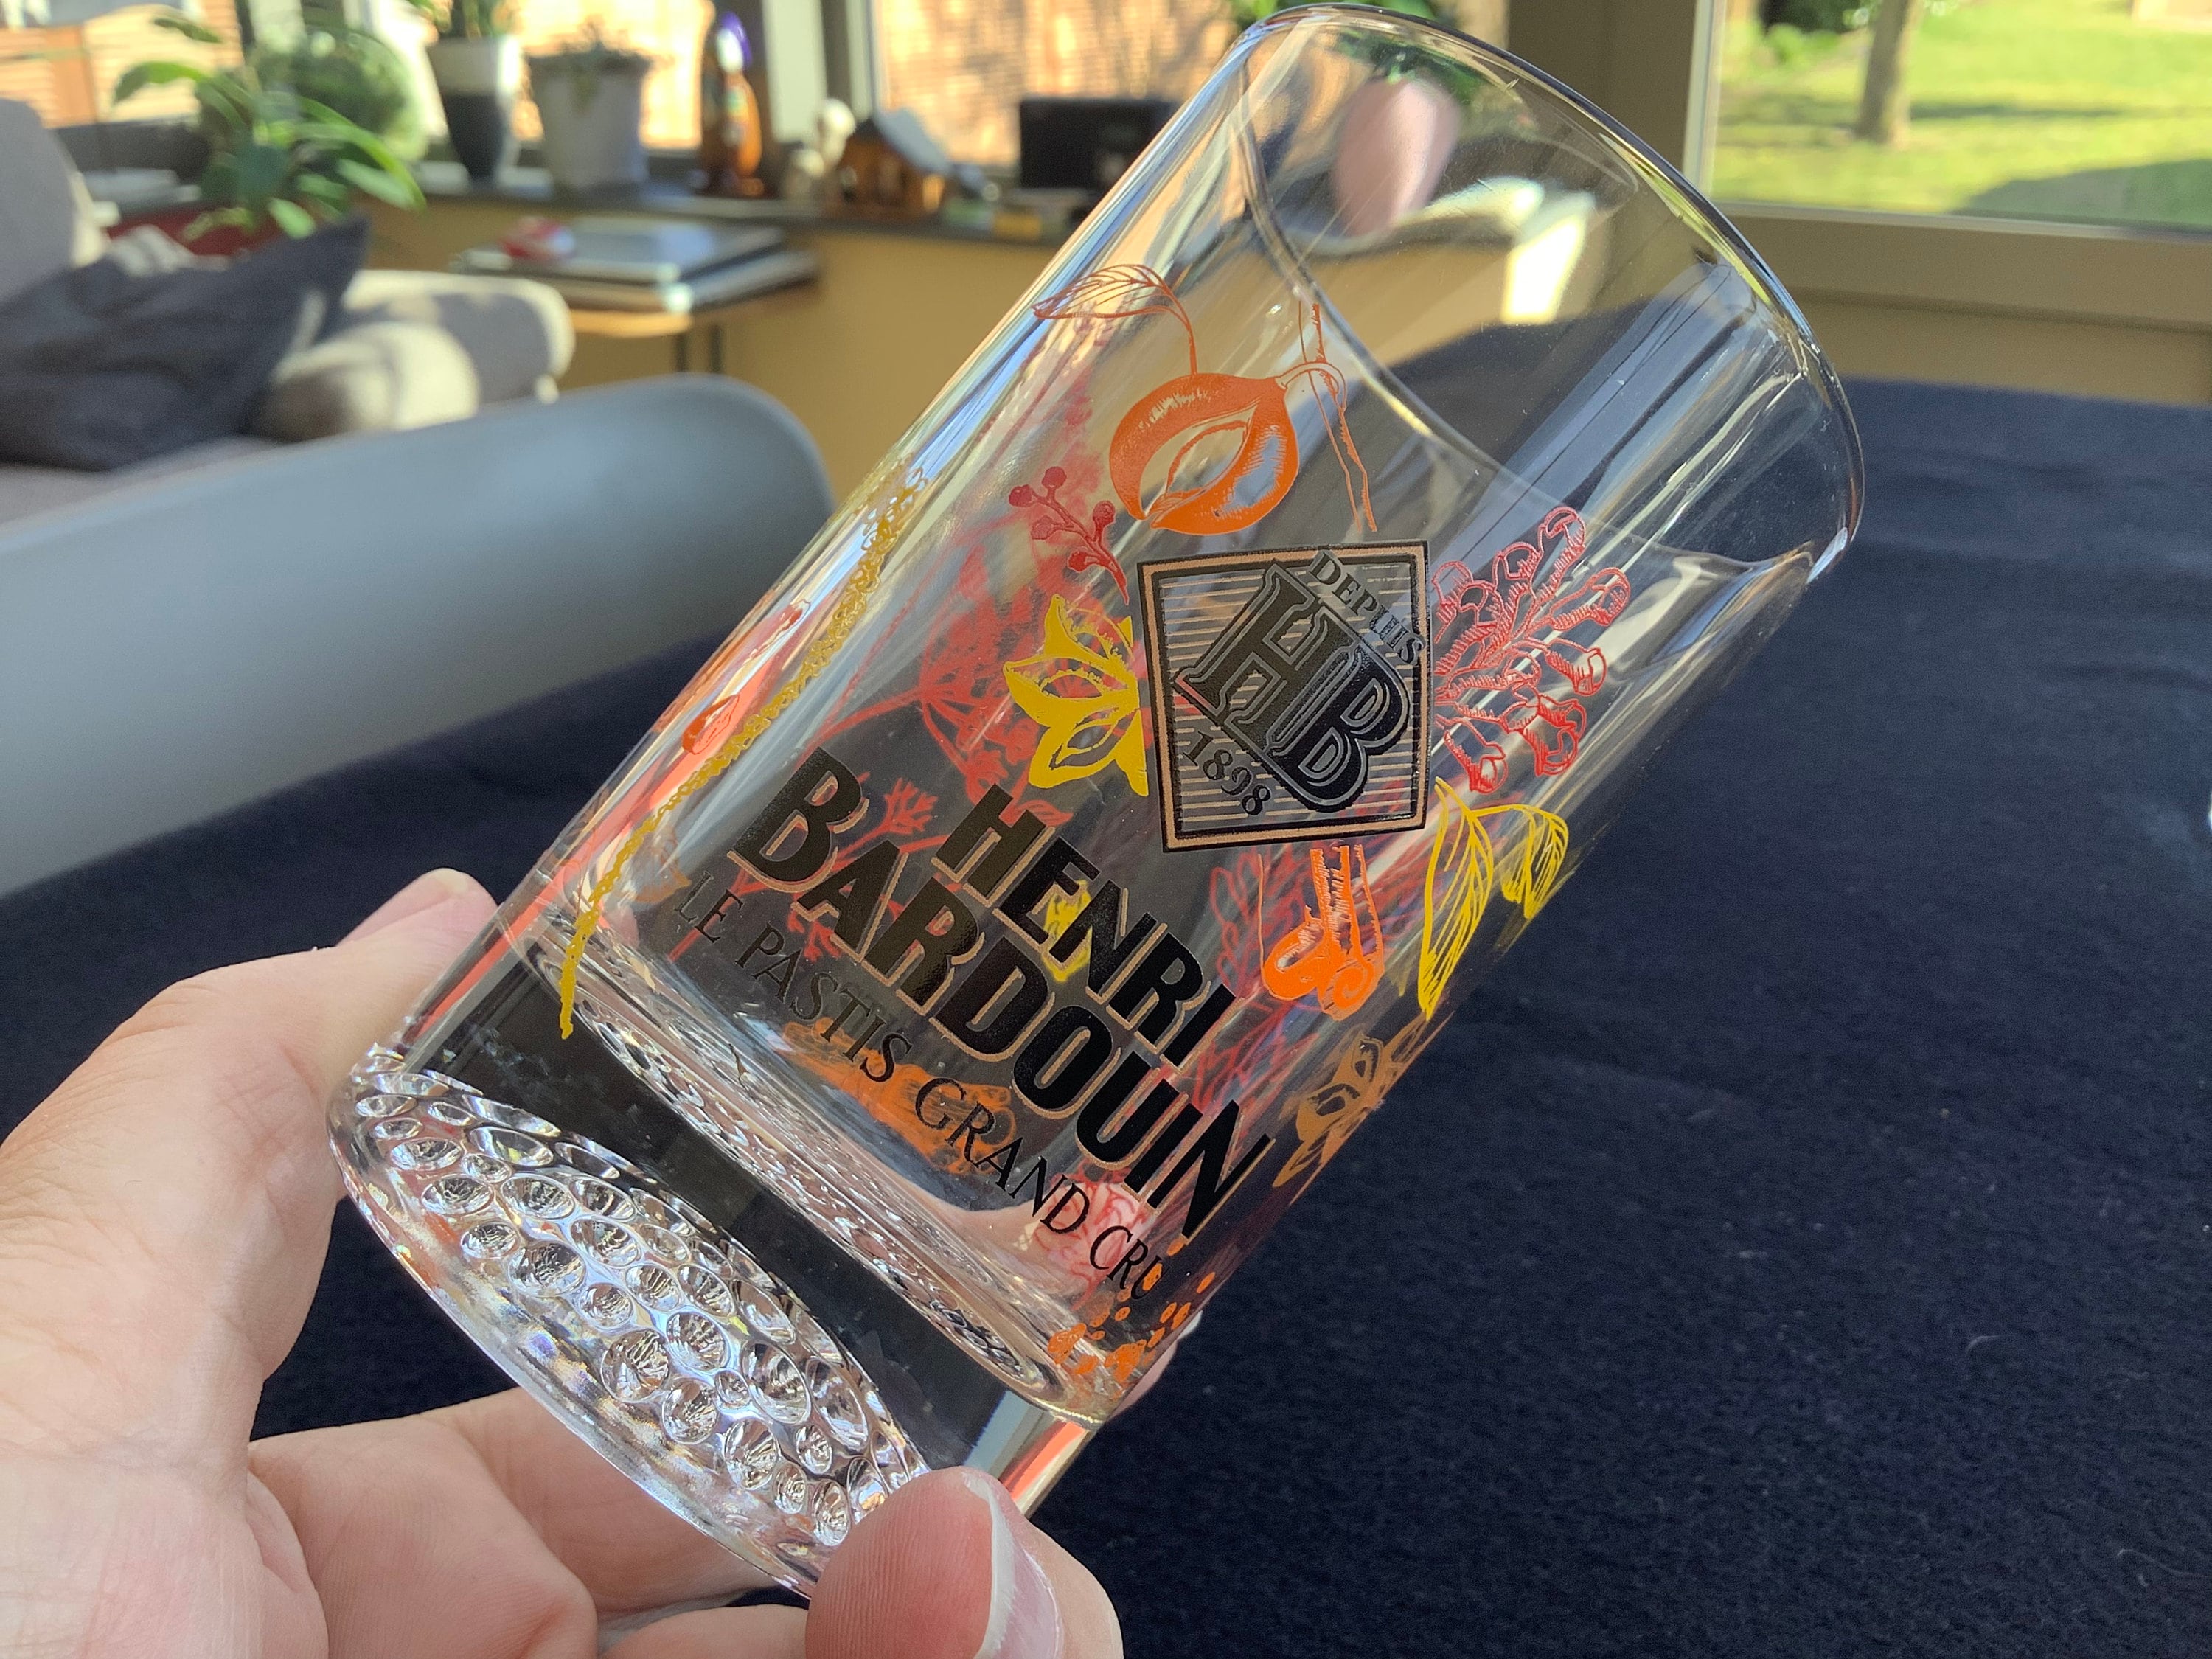 Henri Bardouin Pastis 45% - Gift Set with 2 Glasses - Henri Bardouin